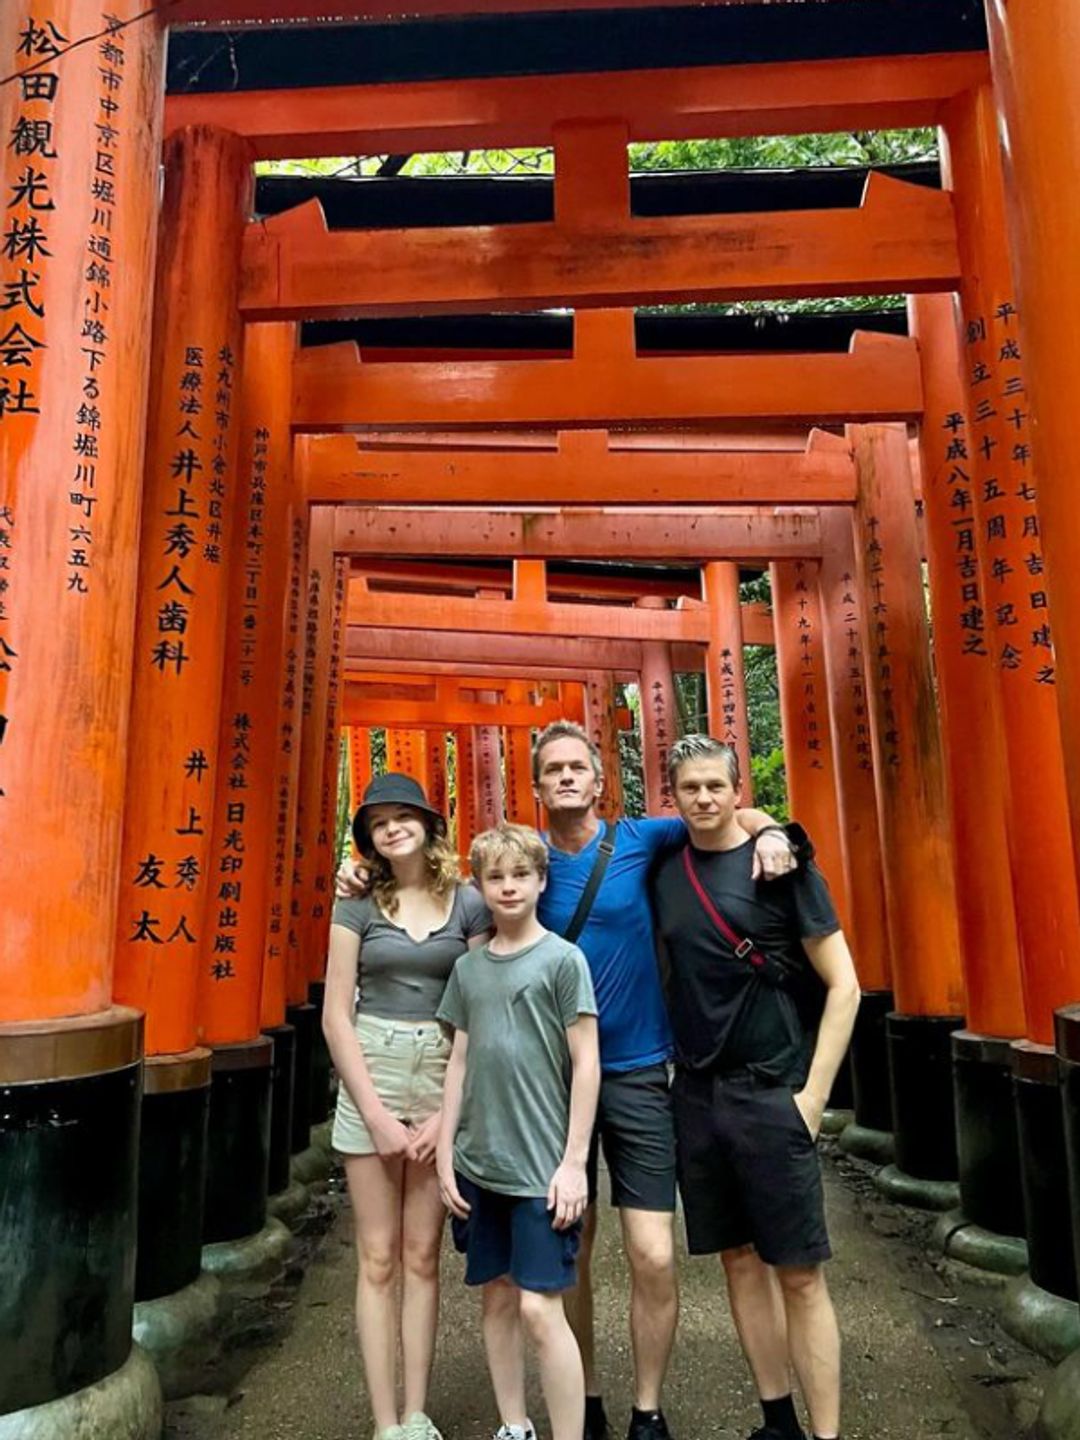 Neil Patrick Harris, David Burtka and their twins under the Japanese arch